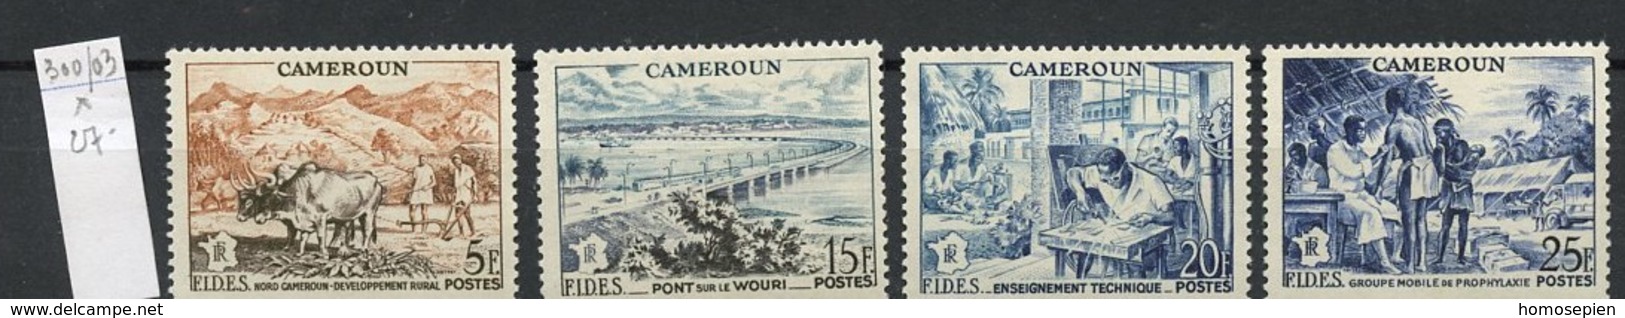 Cameroun - Kamerun - Cameroon 1956 Y&T N°300 à 303 - Michel N°312 à 315 * - FIDES - Neufs